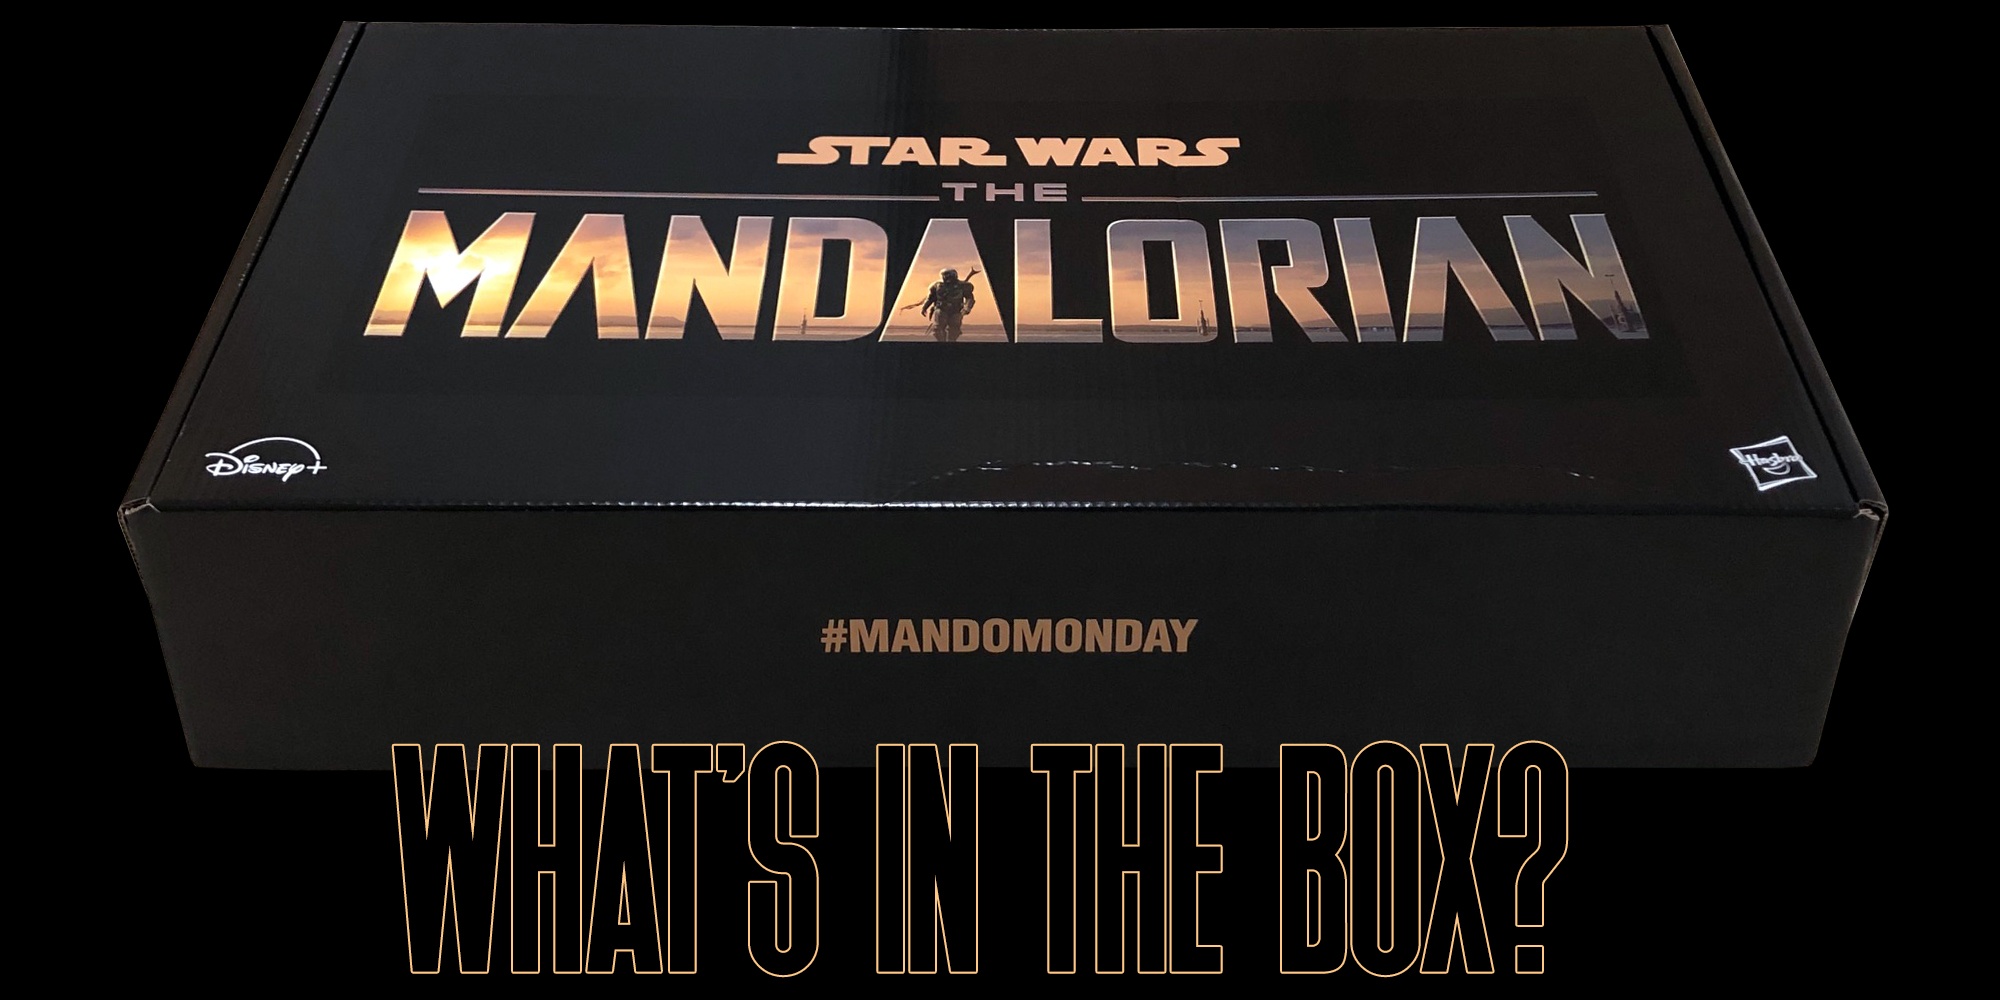 A Look At The Star Wars The Mandalorian #MandoMonday Promo Box